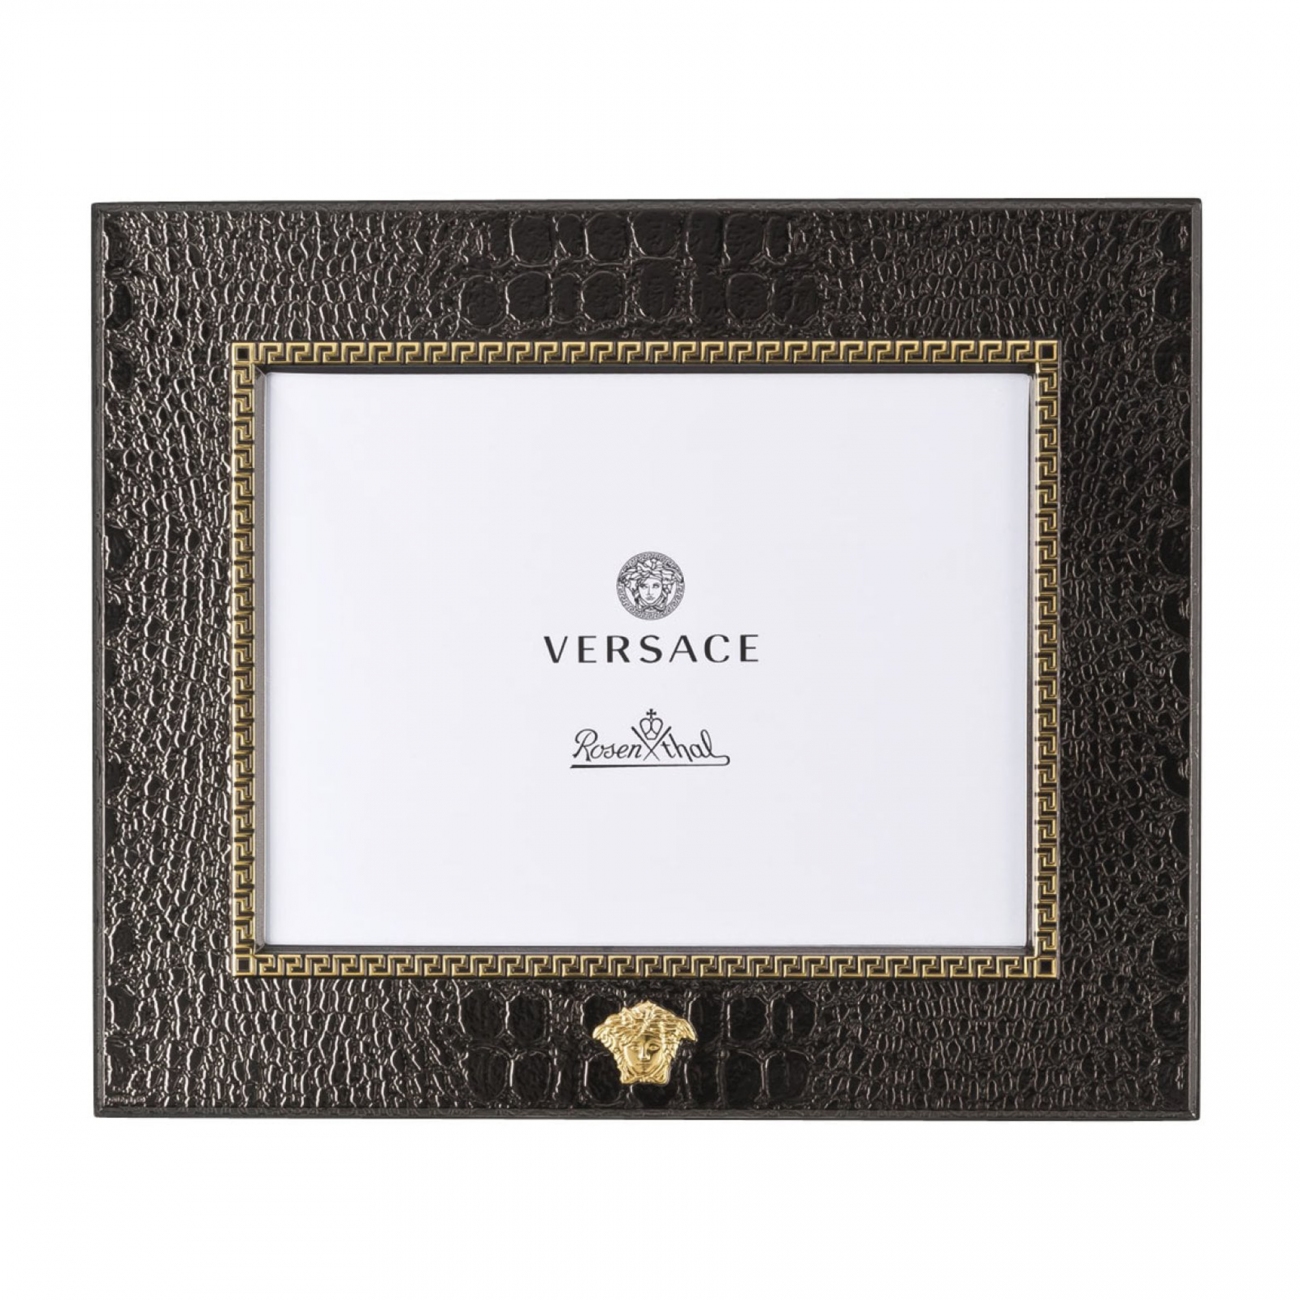 Rosenthal Versace Frames VHF3 Black Picture frame